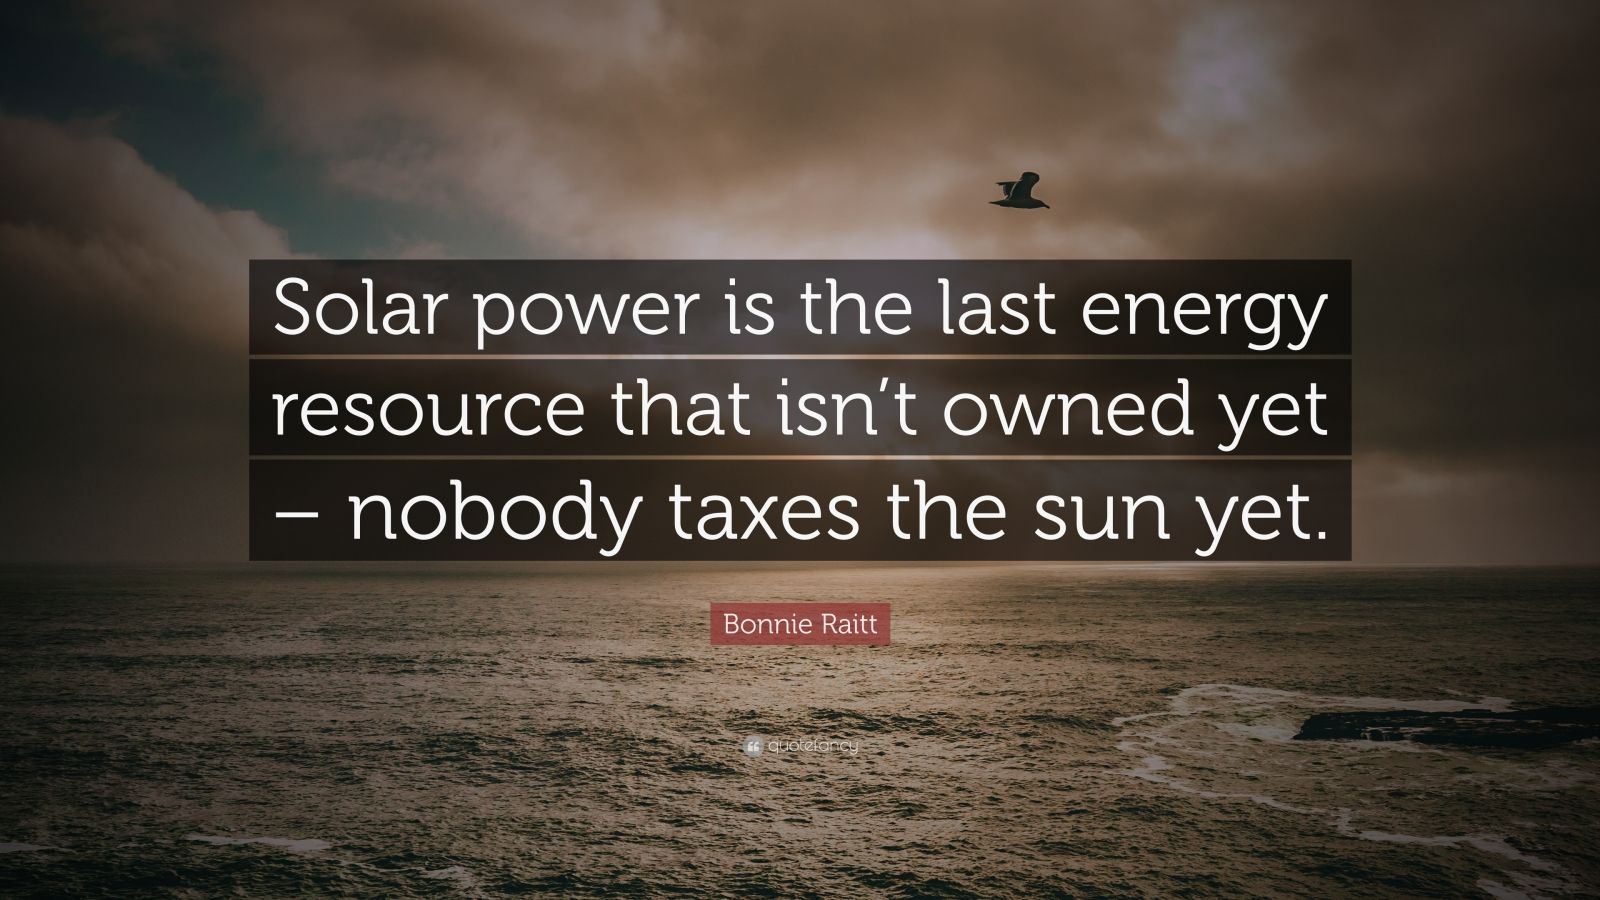 Bonnie Raitt Quote “Solar power is the last energy